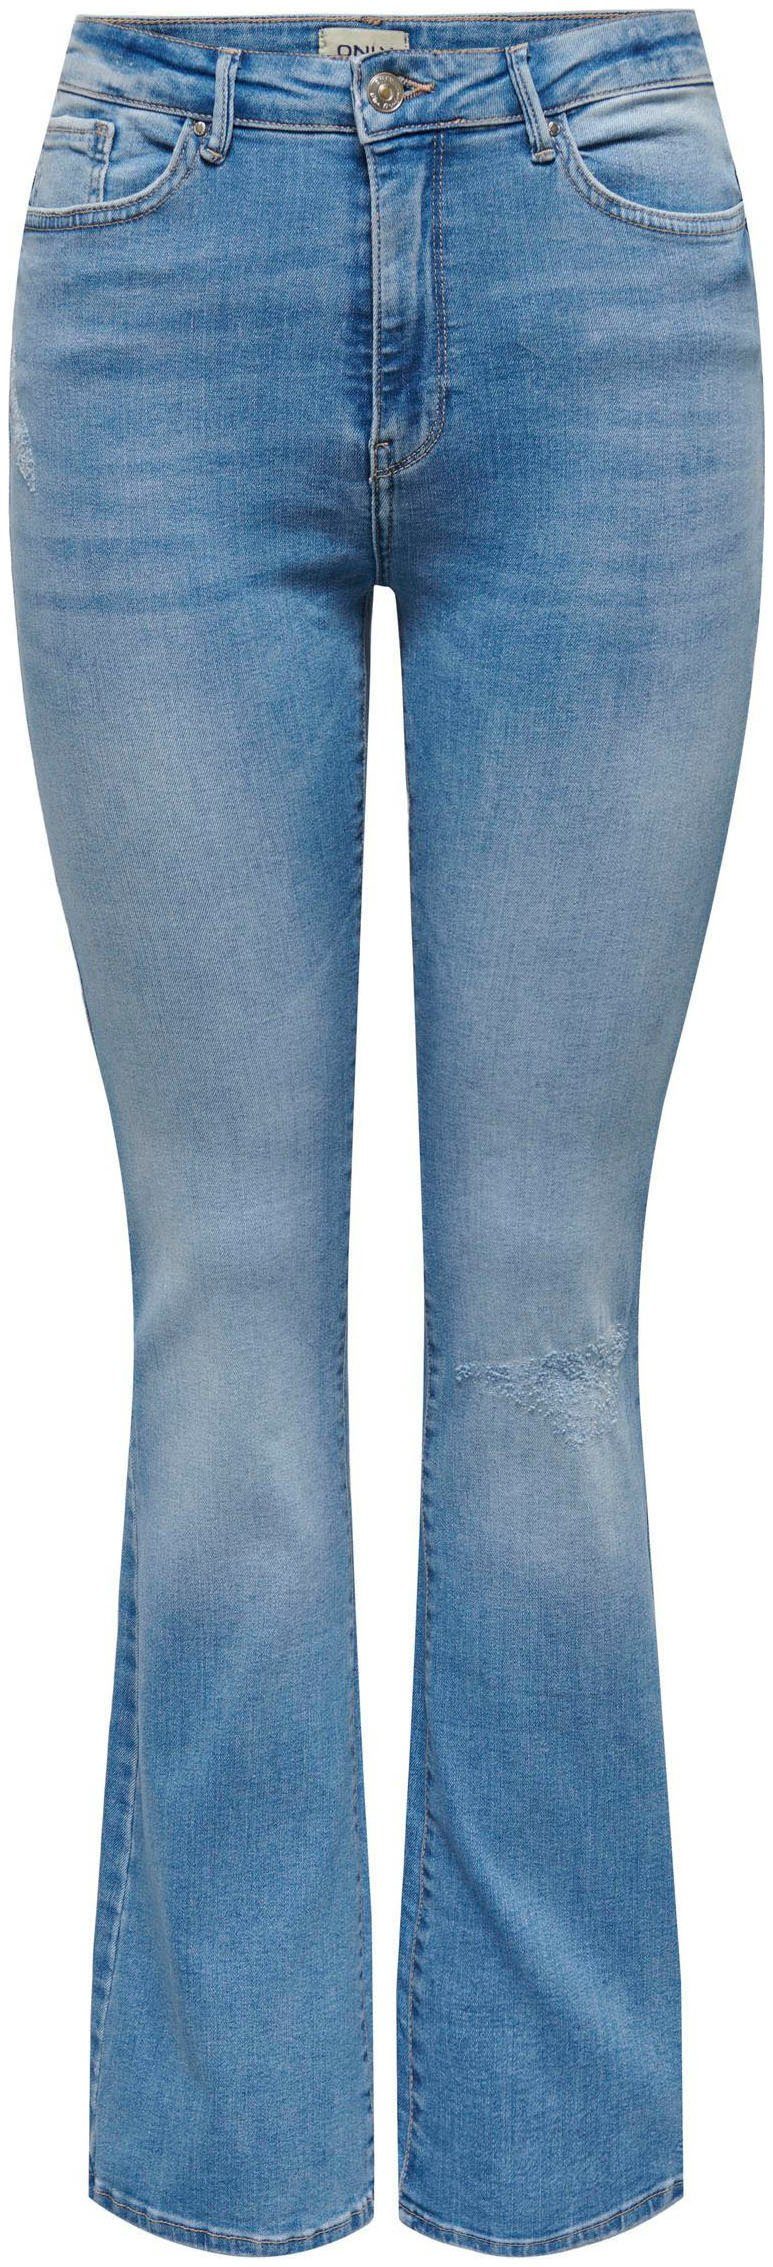 DESTROY Bootcut-Jeans ONLPAOLA AZ FLARED ONLY WAIST MID